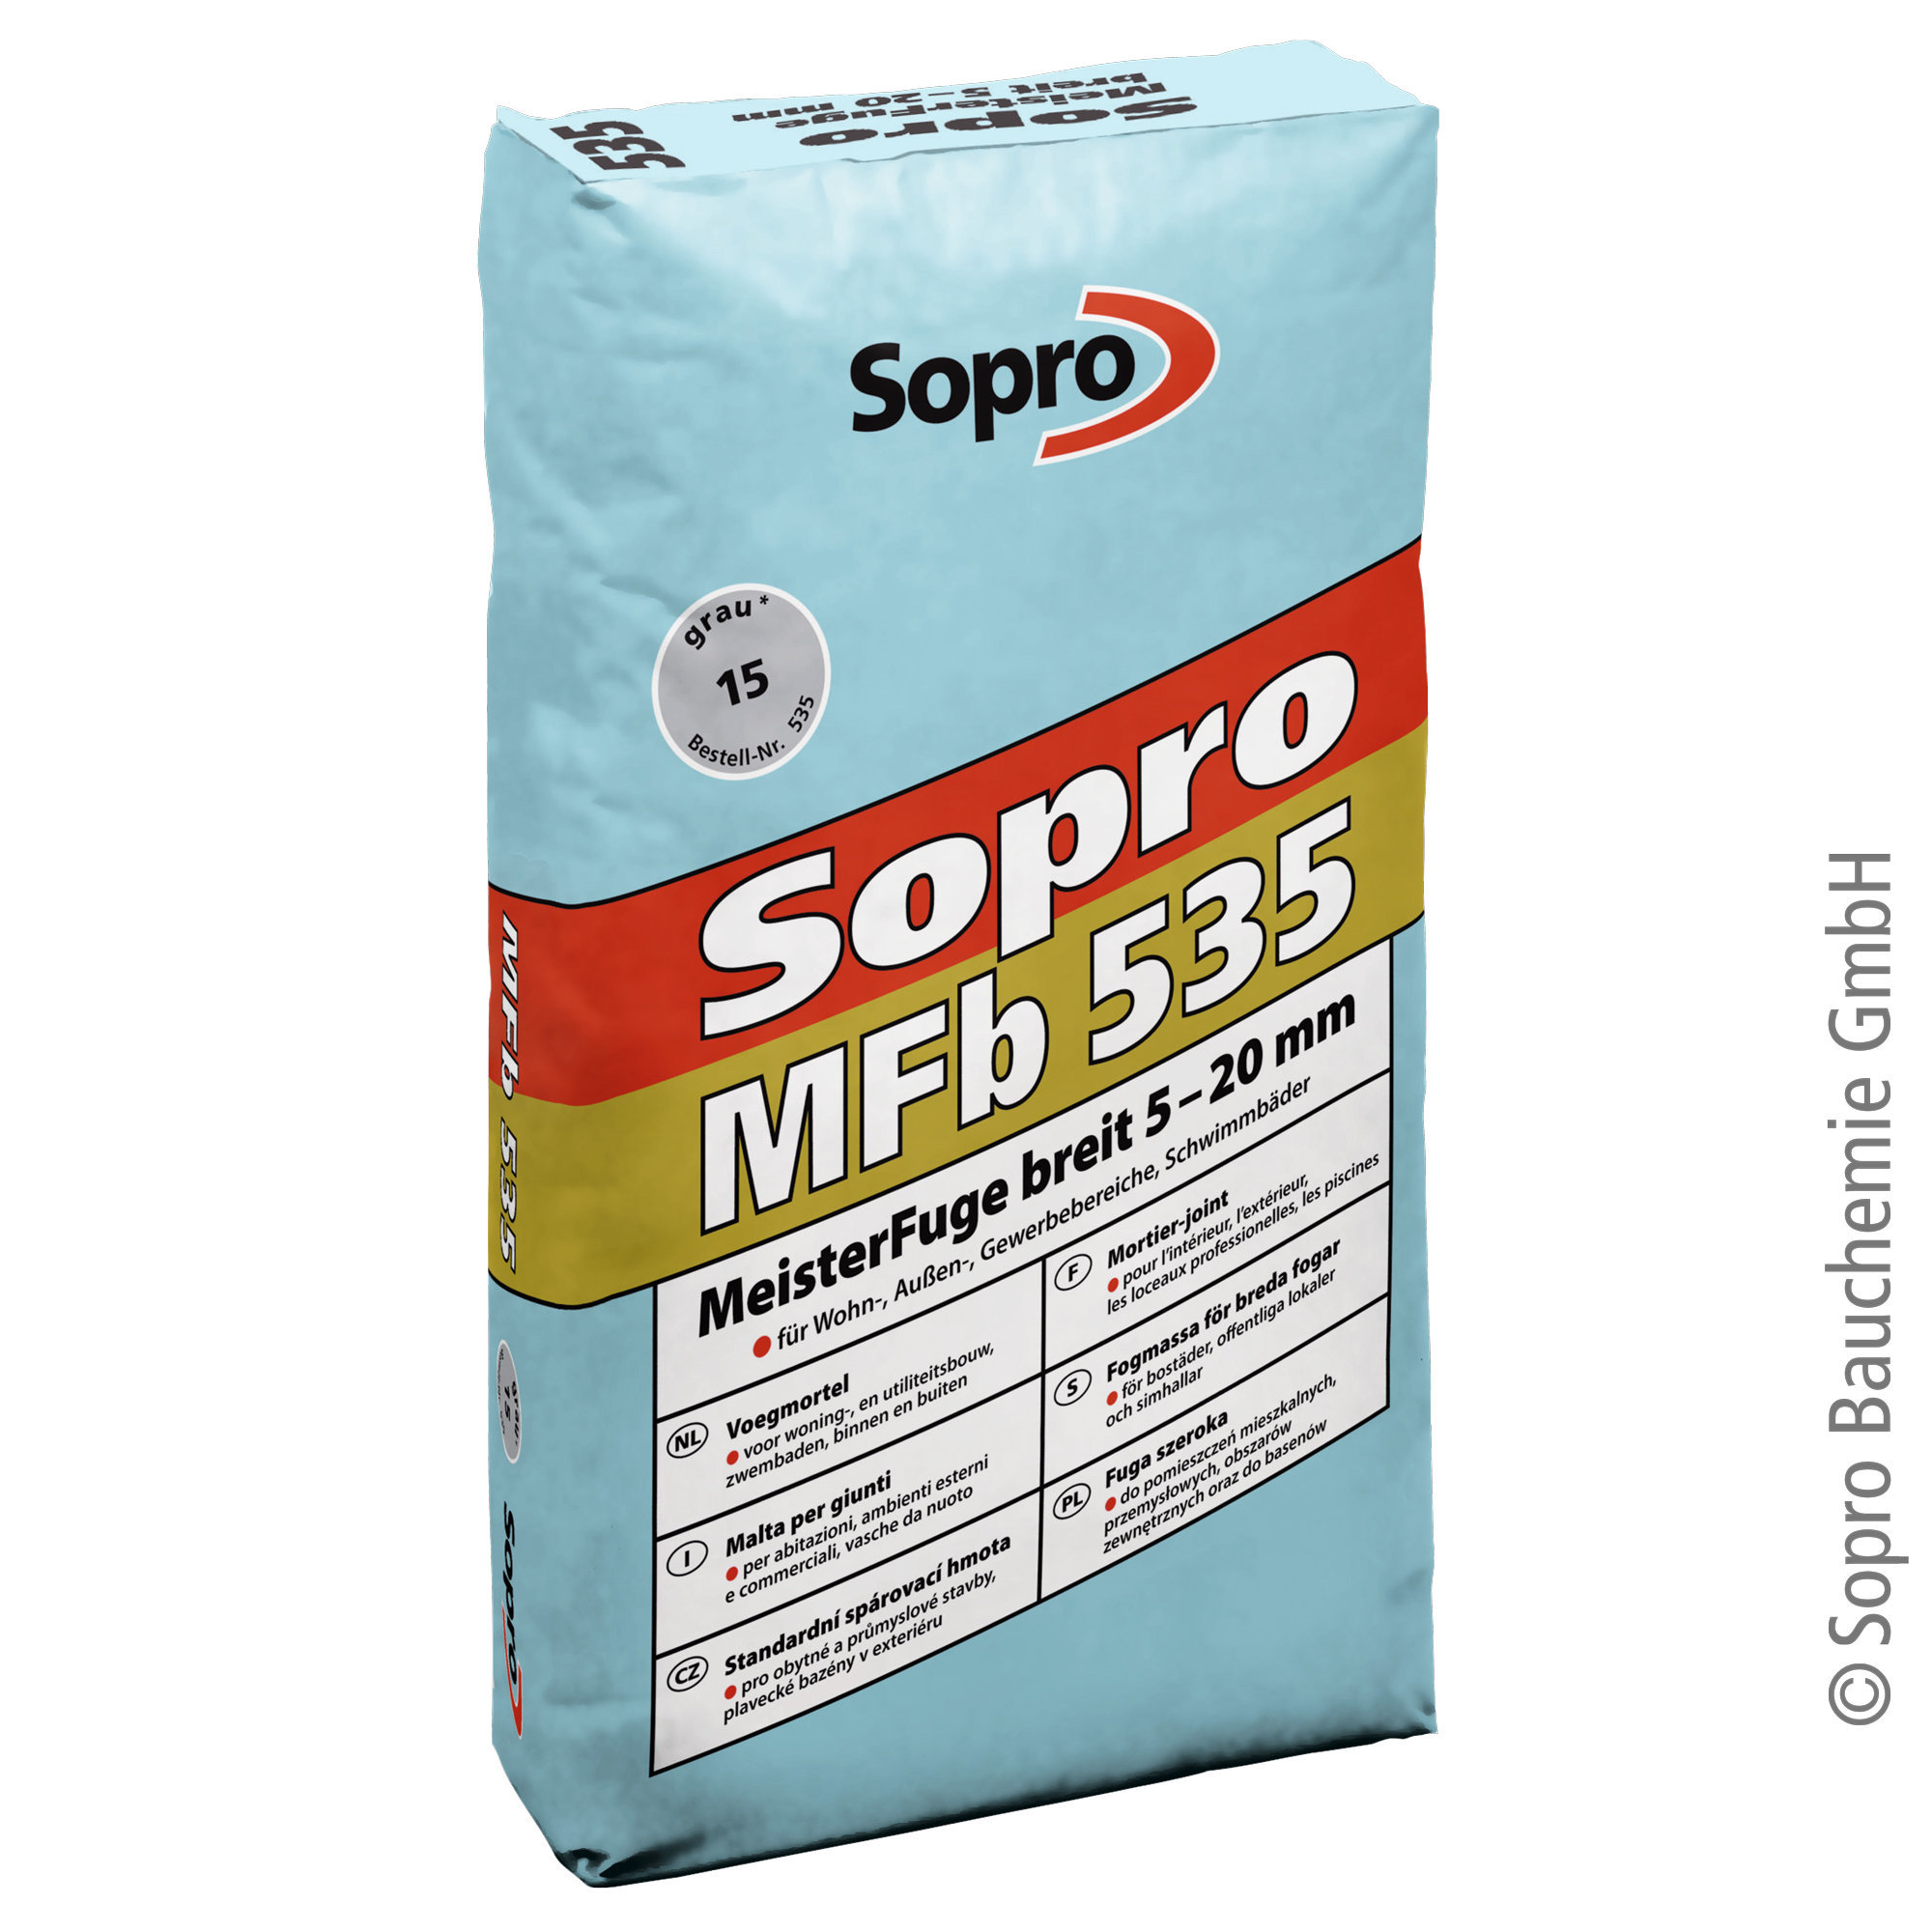 Sopro MeisterFuge breit MFb 535